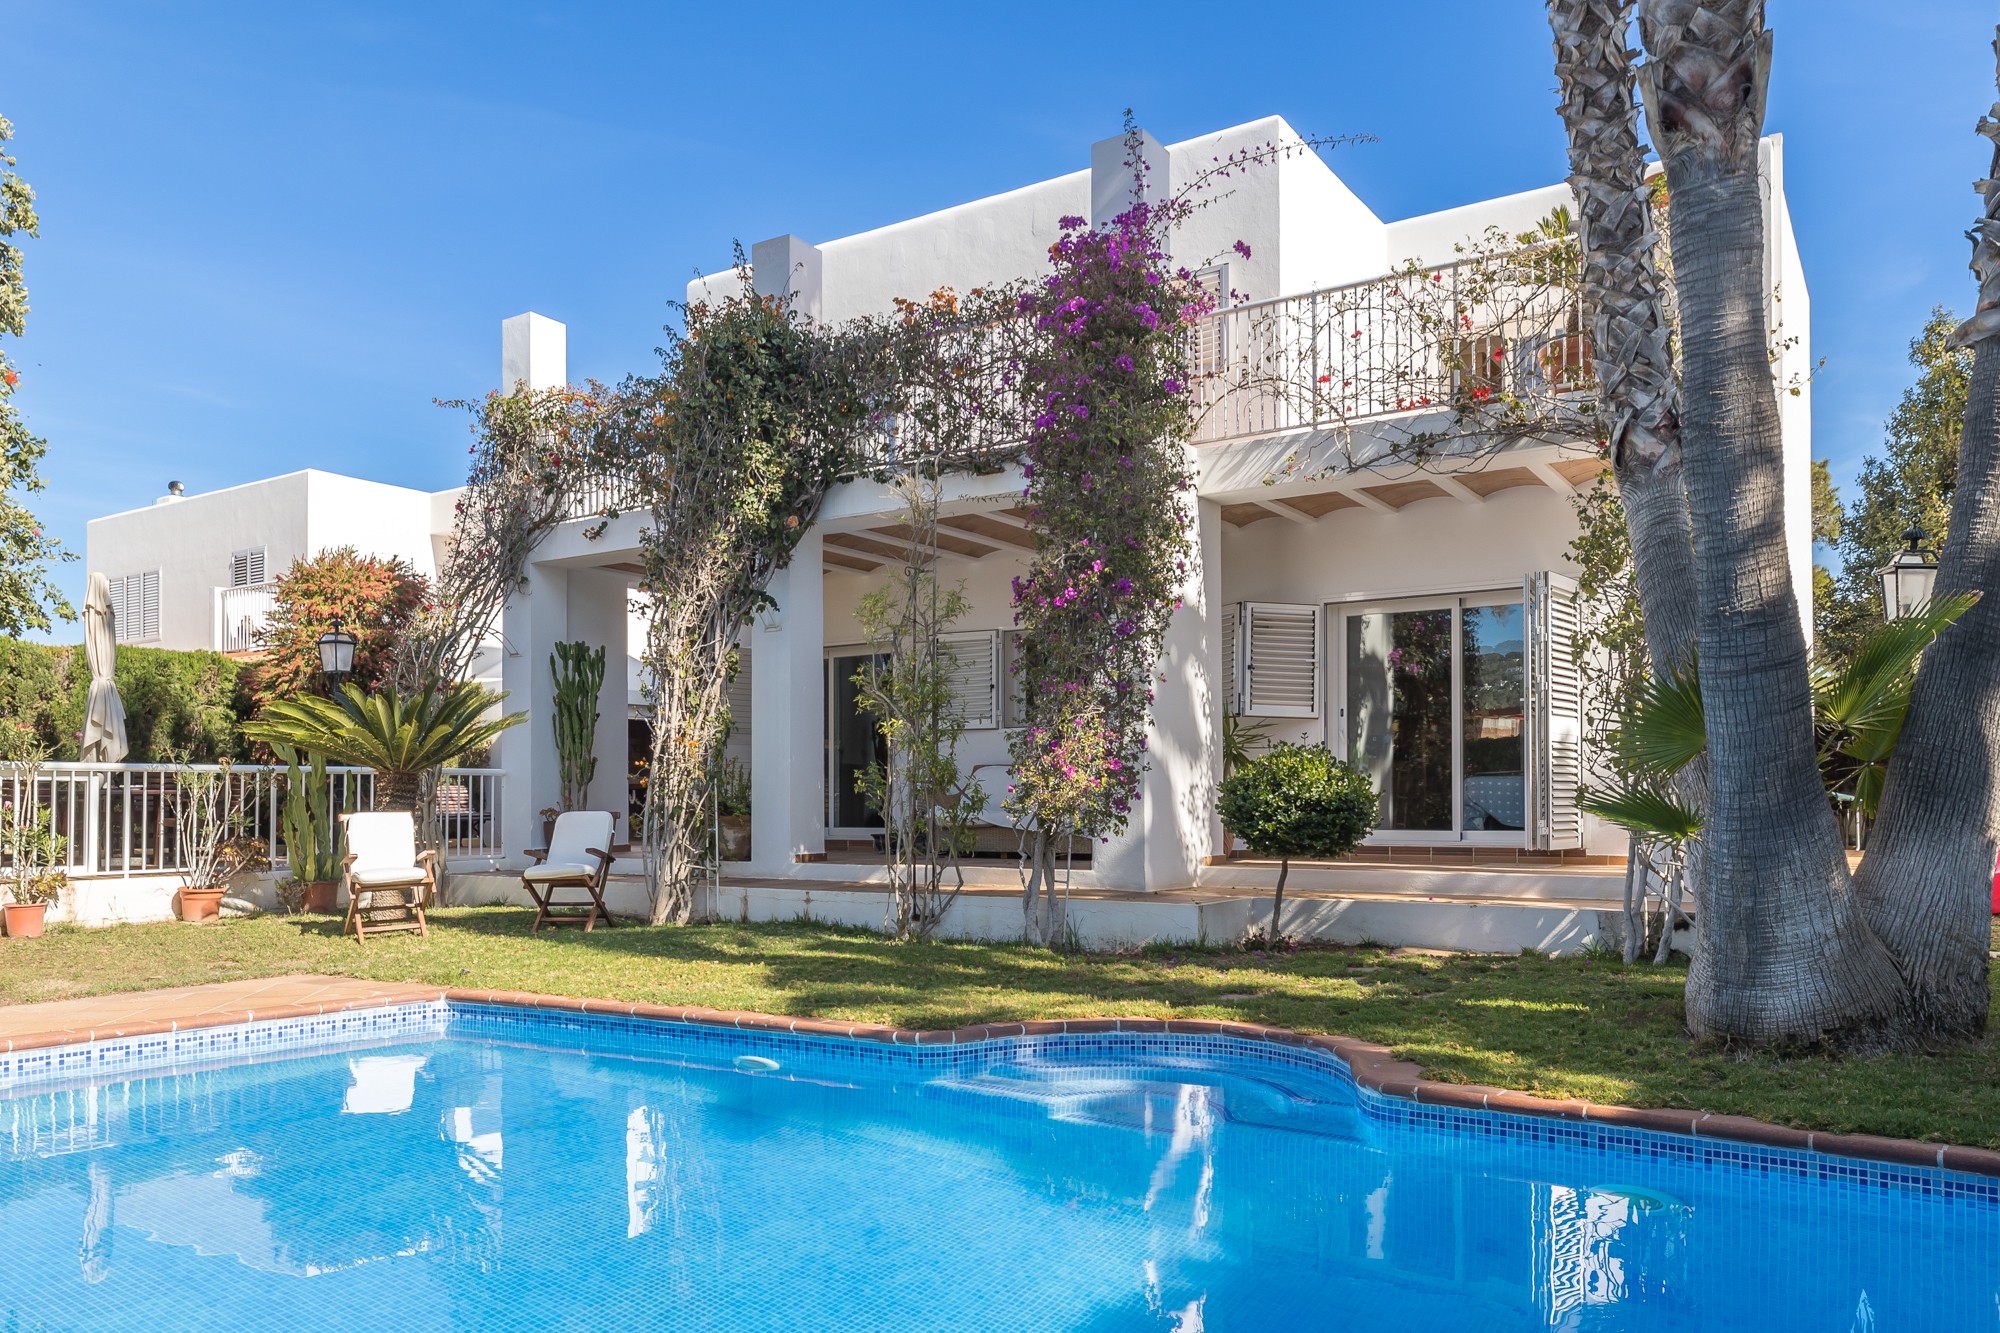 Mediterranean villa with pool - 1